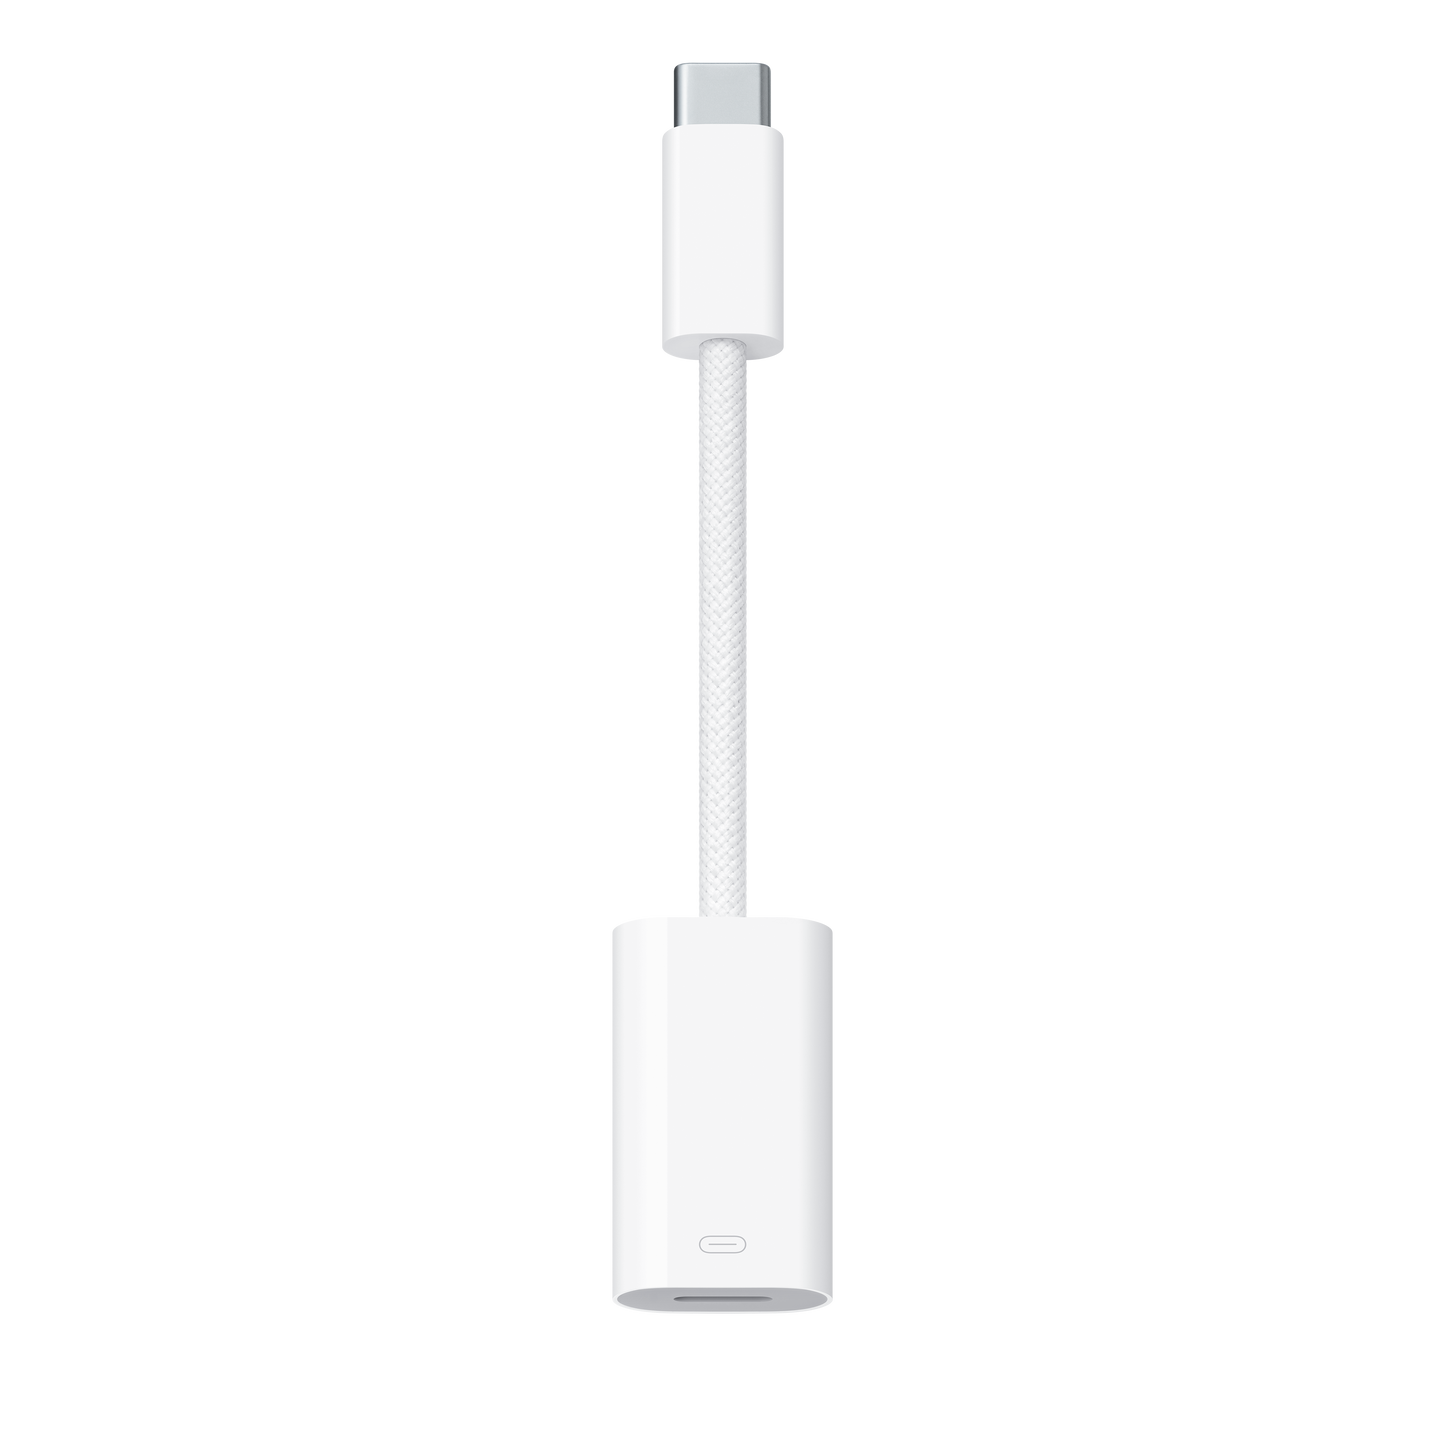 Adaptador Apple de USB-C a Lightning